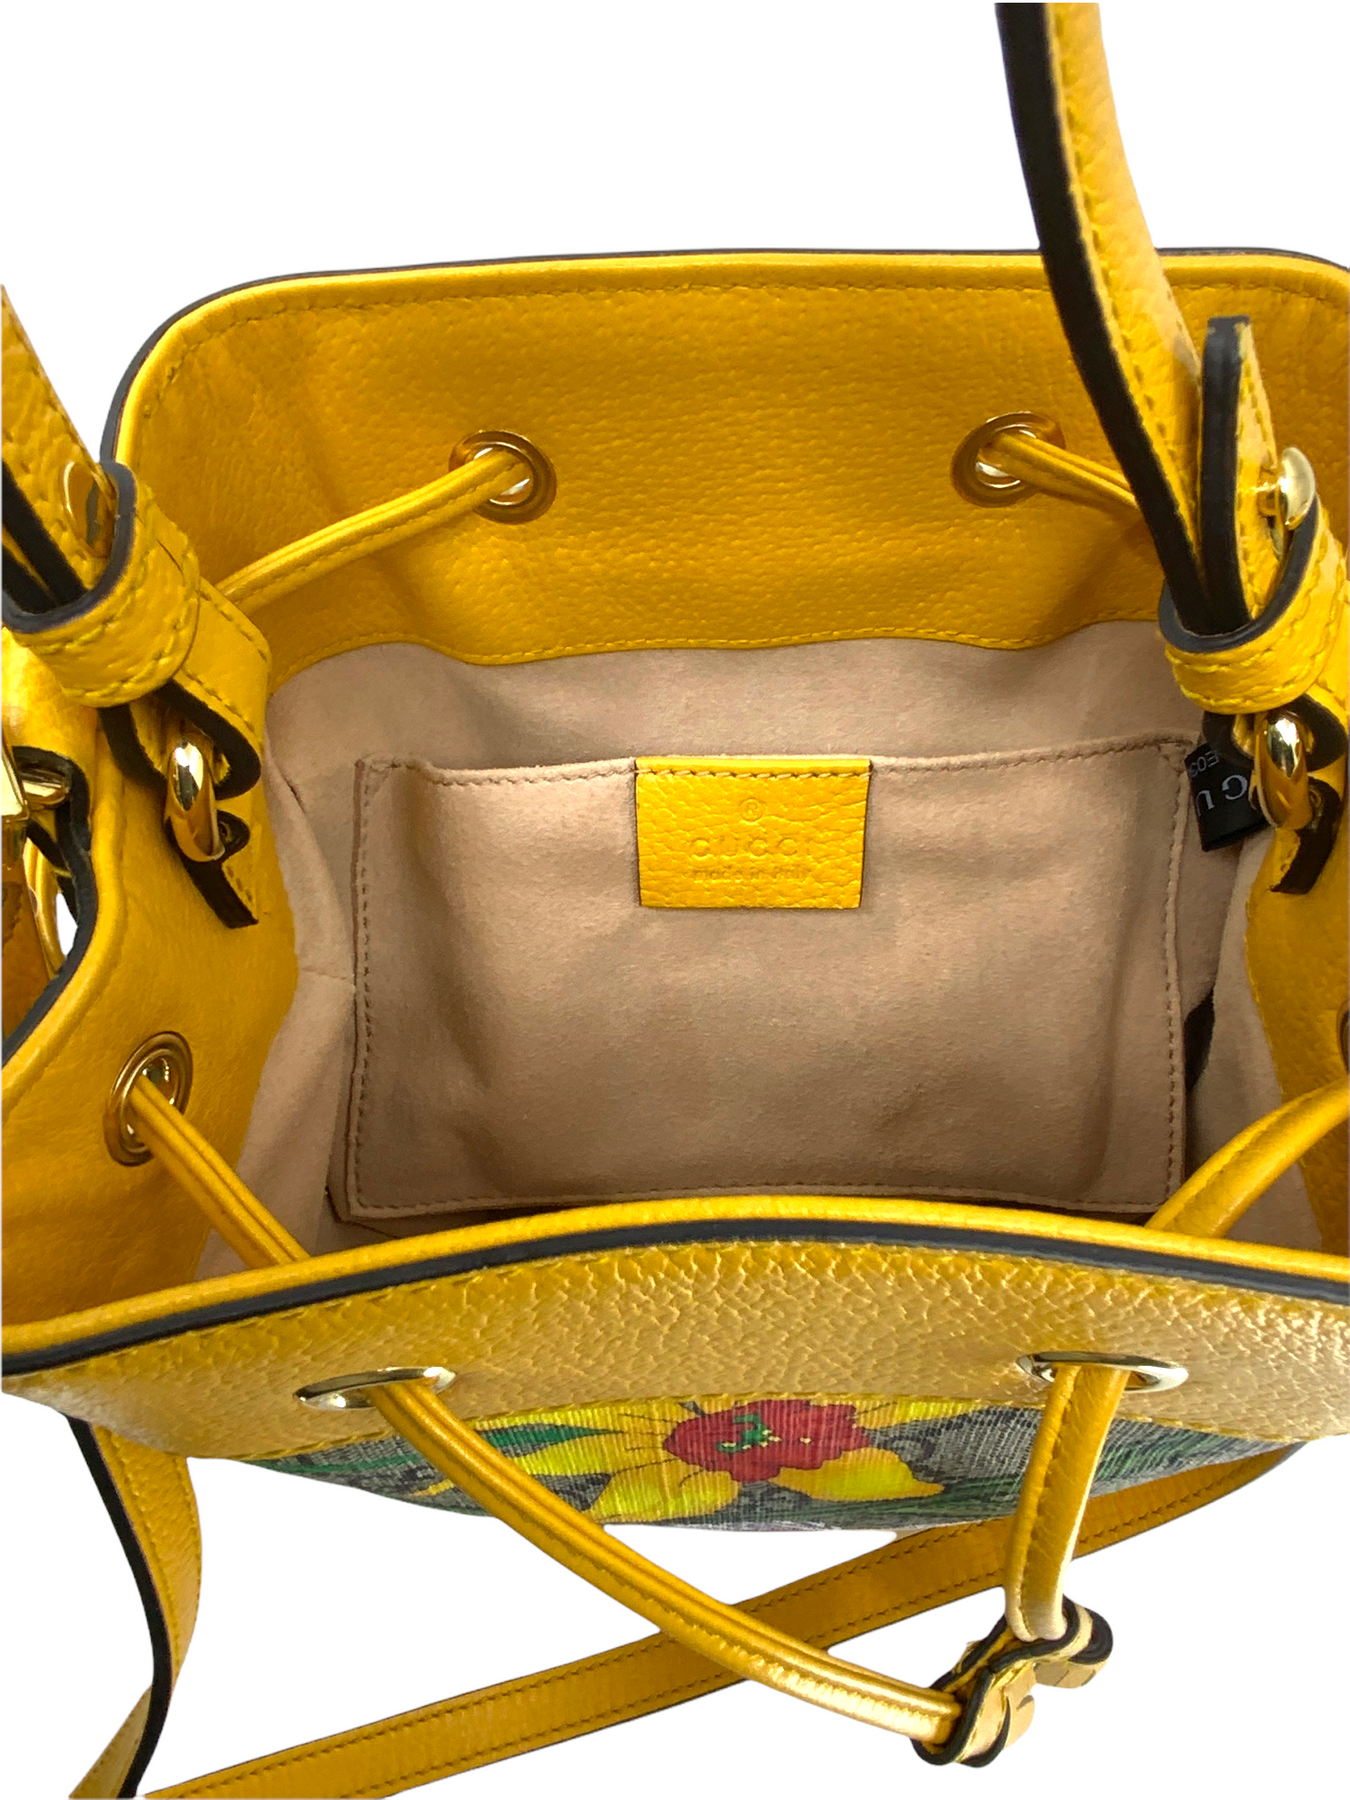 Gucci GG supreme monogram flora bucket bag with yellow leather